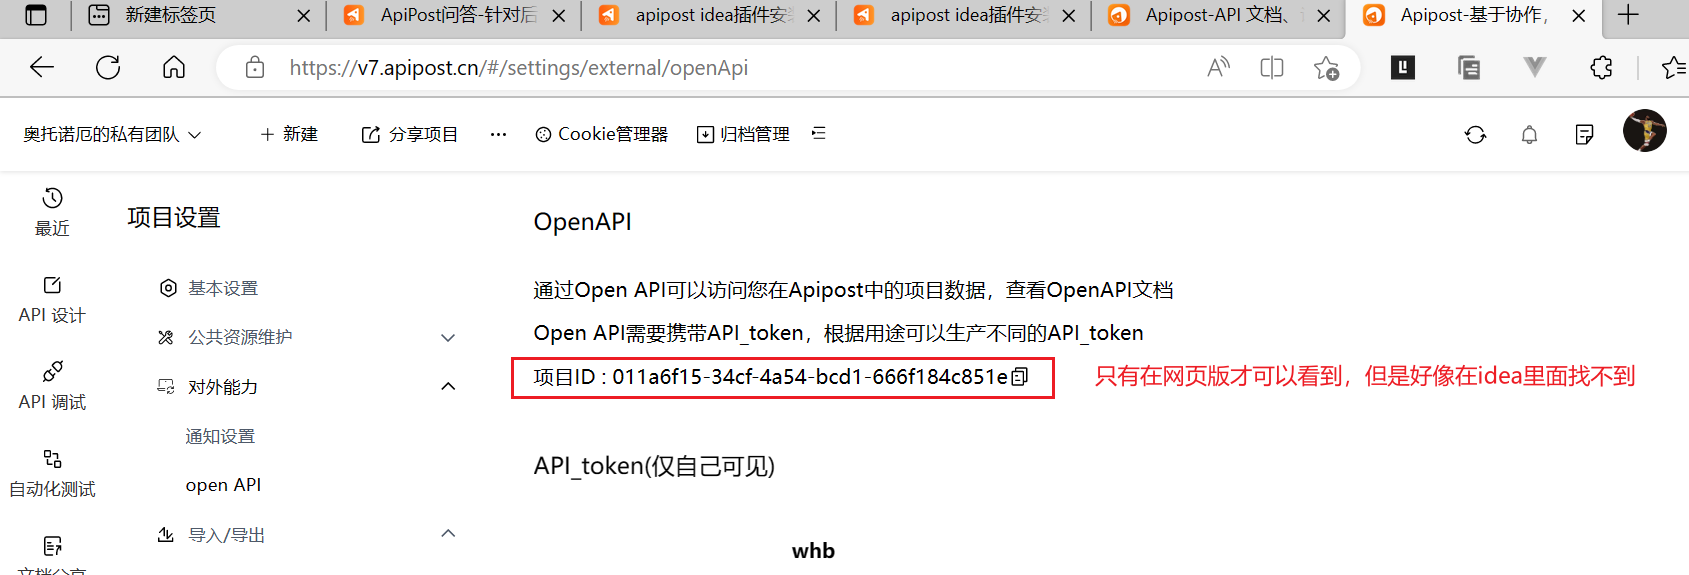 apipost idea插件安装后，在idea的apipost config中需要配置项目ID，但是apipost客户端的项目设置->对外能力->open api中没有显示项目ID